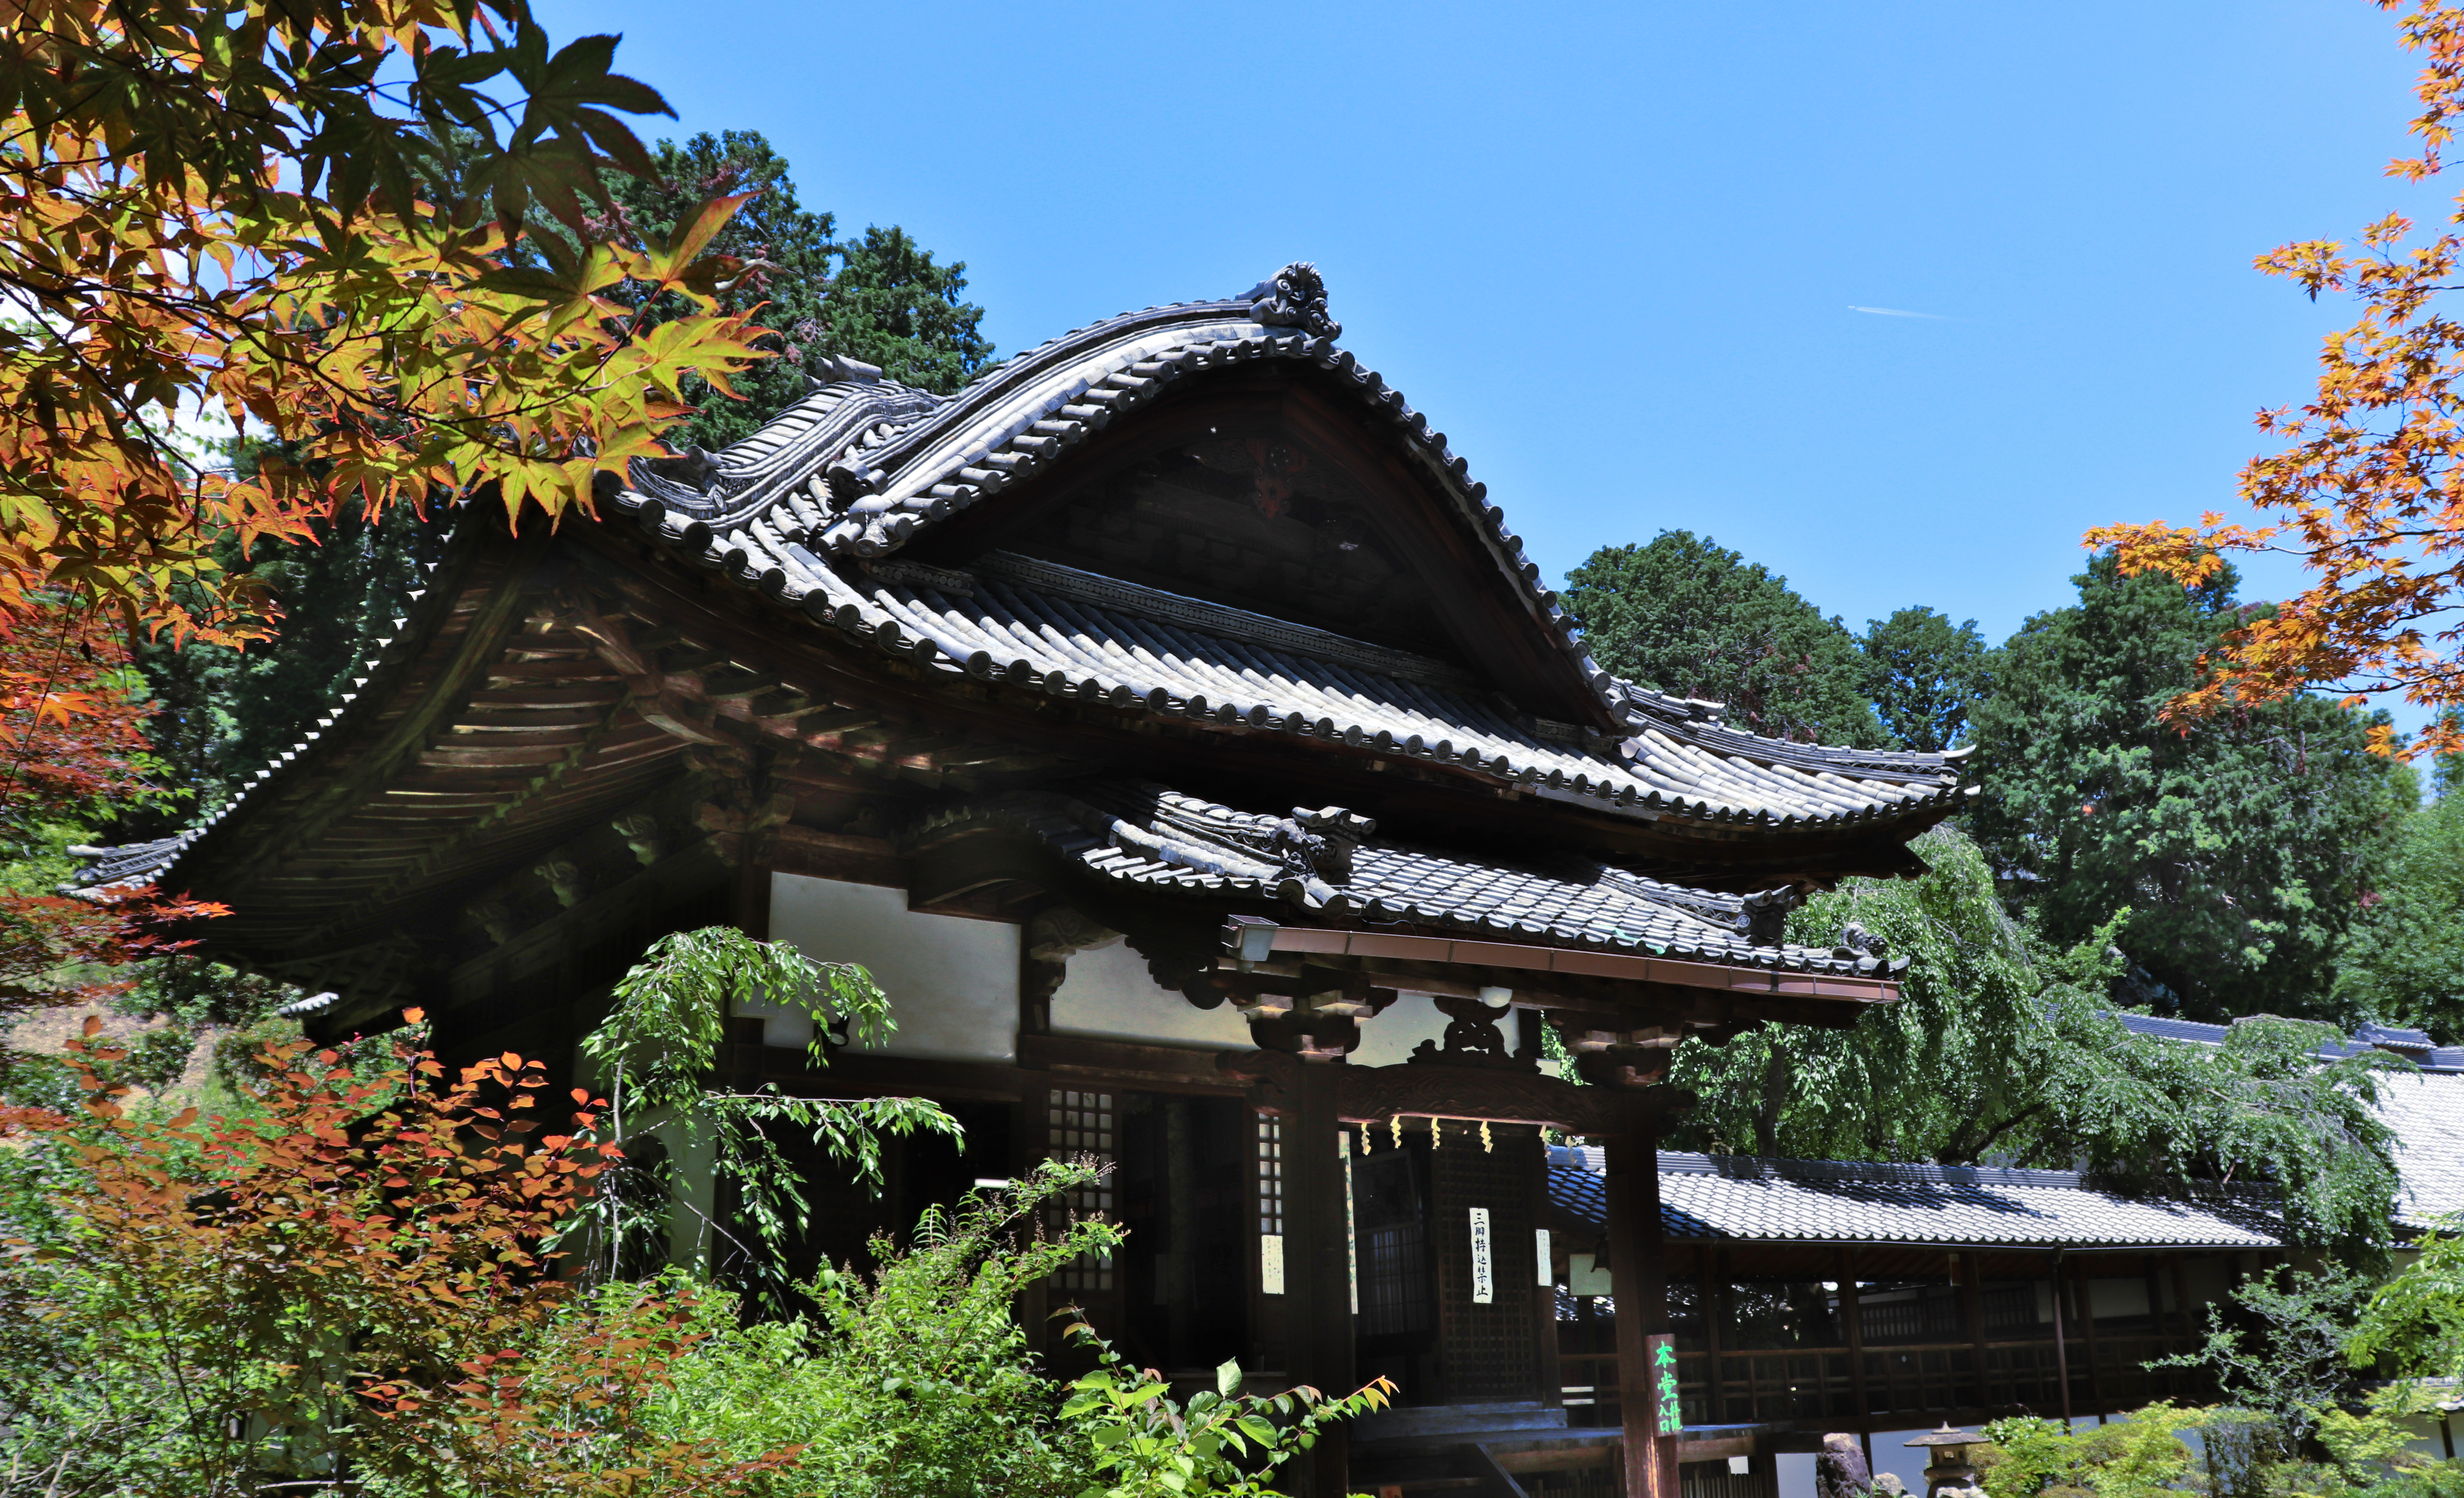 Hondo, main prayer building of Jurin-ji temple